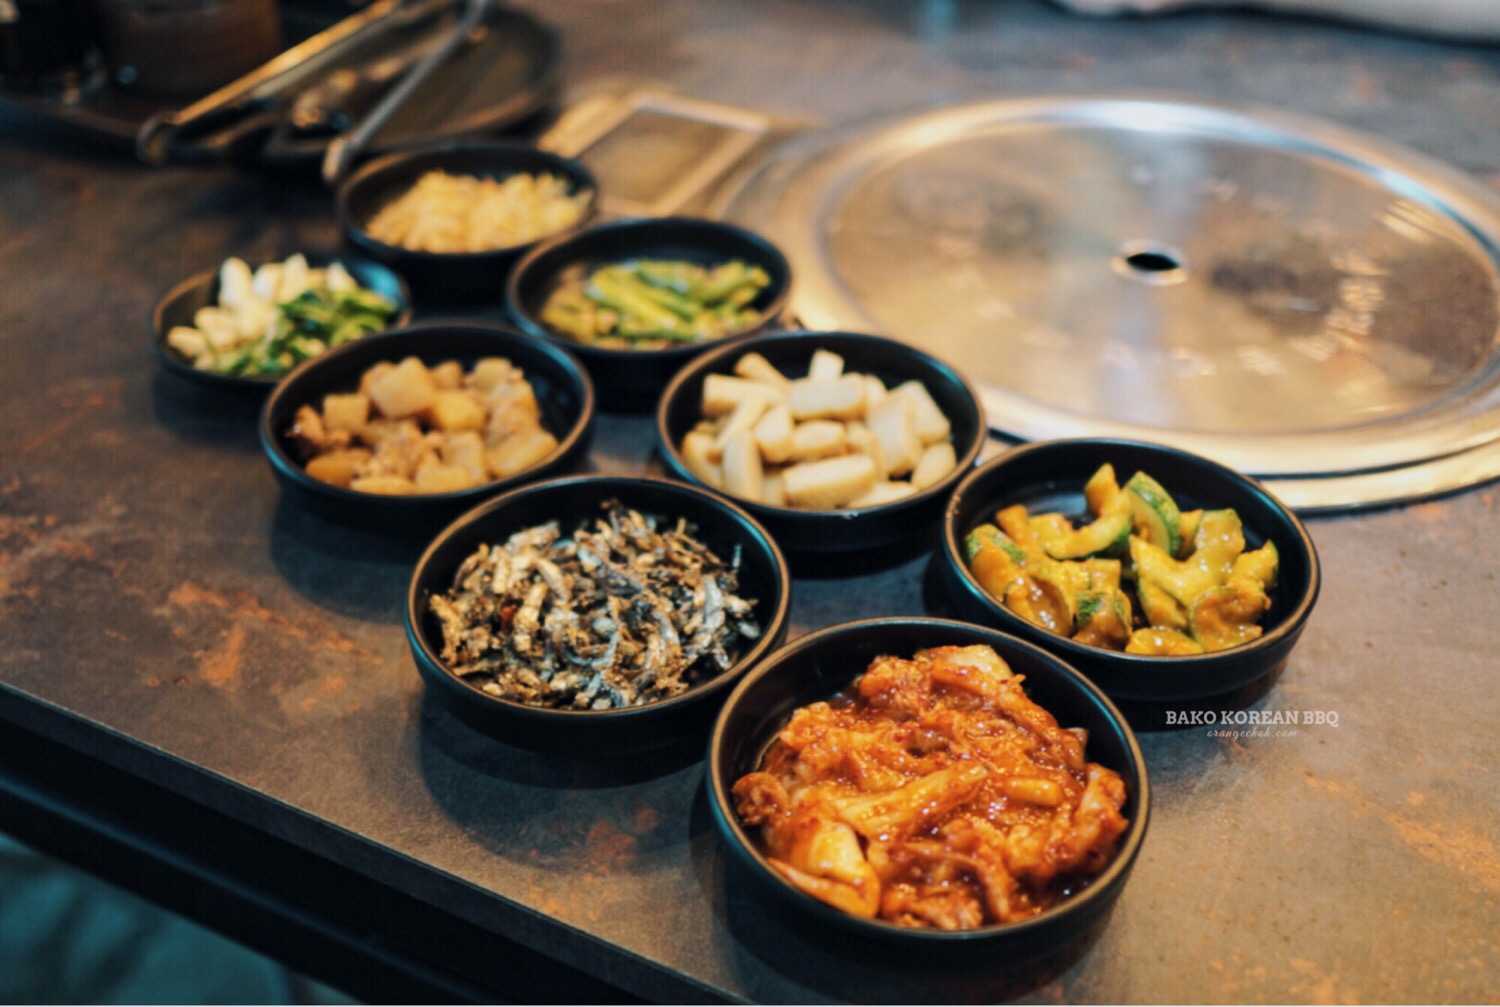 Bako Korean BBQ @ Sri Petaling - Malaysia Food & Travel